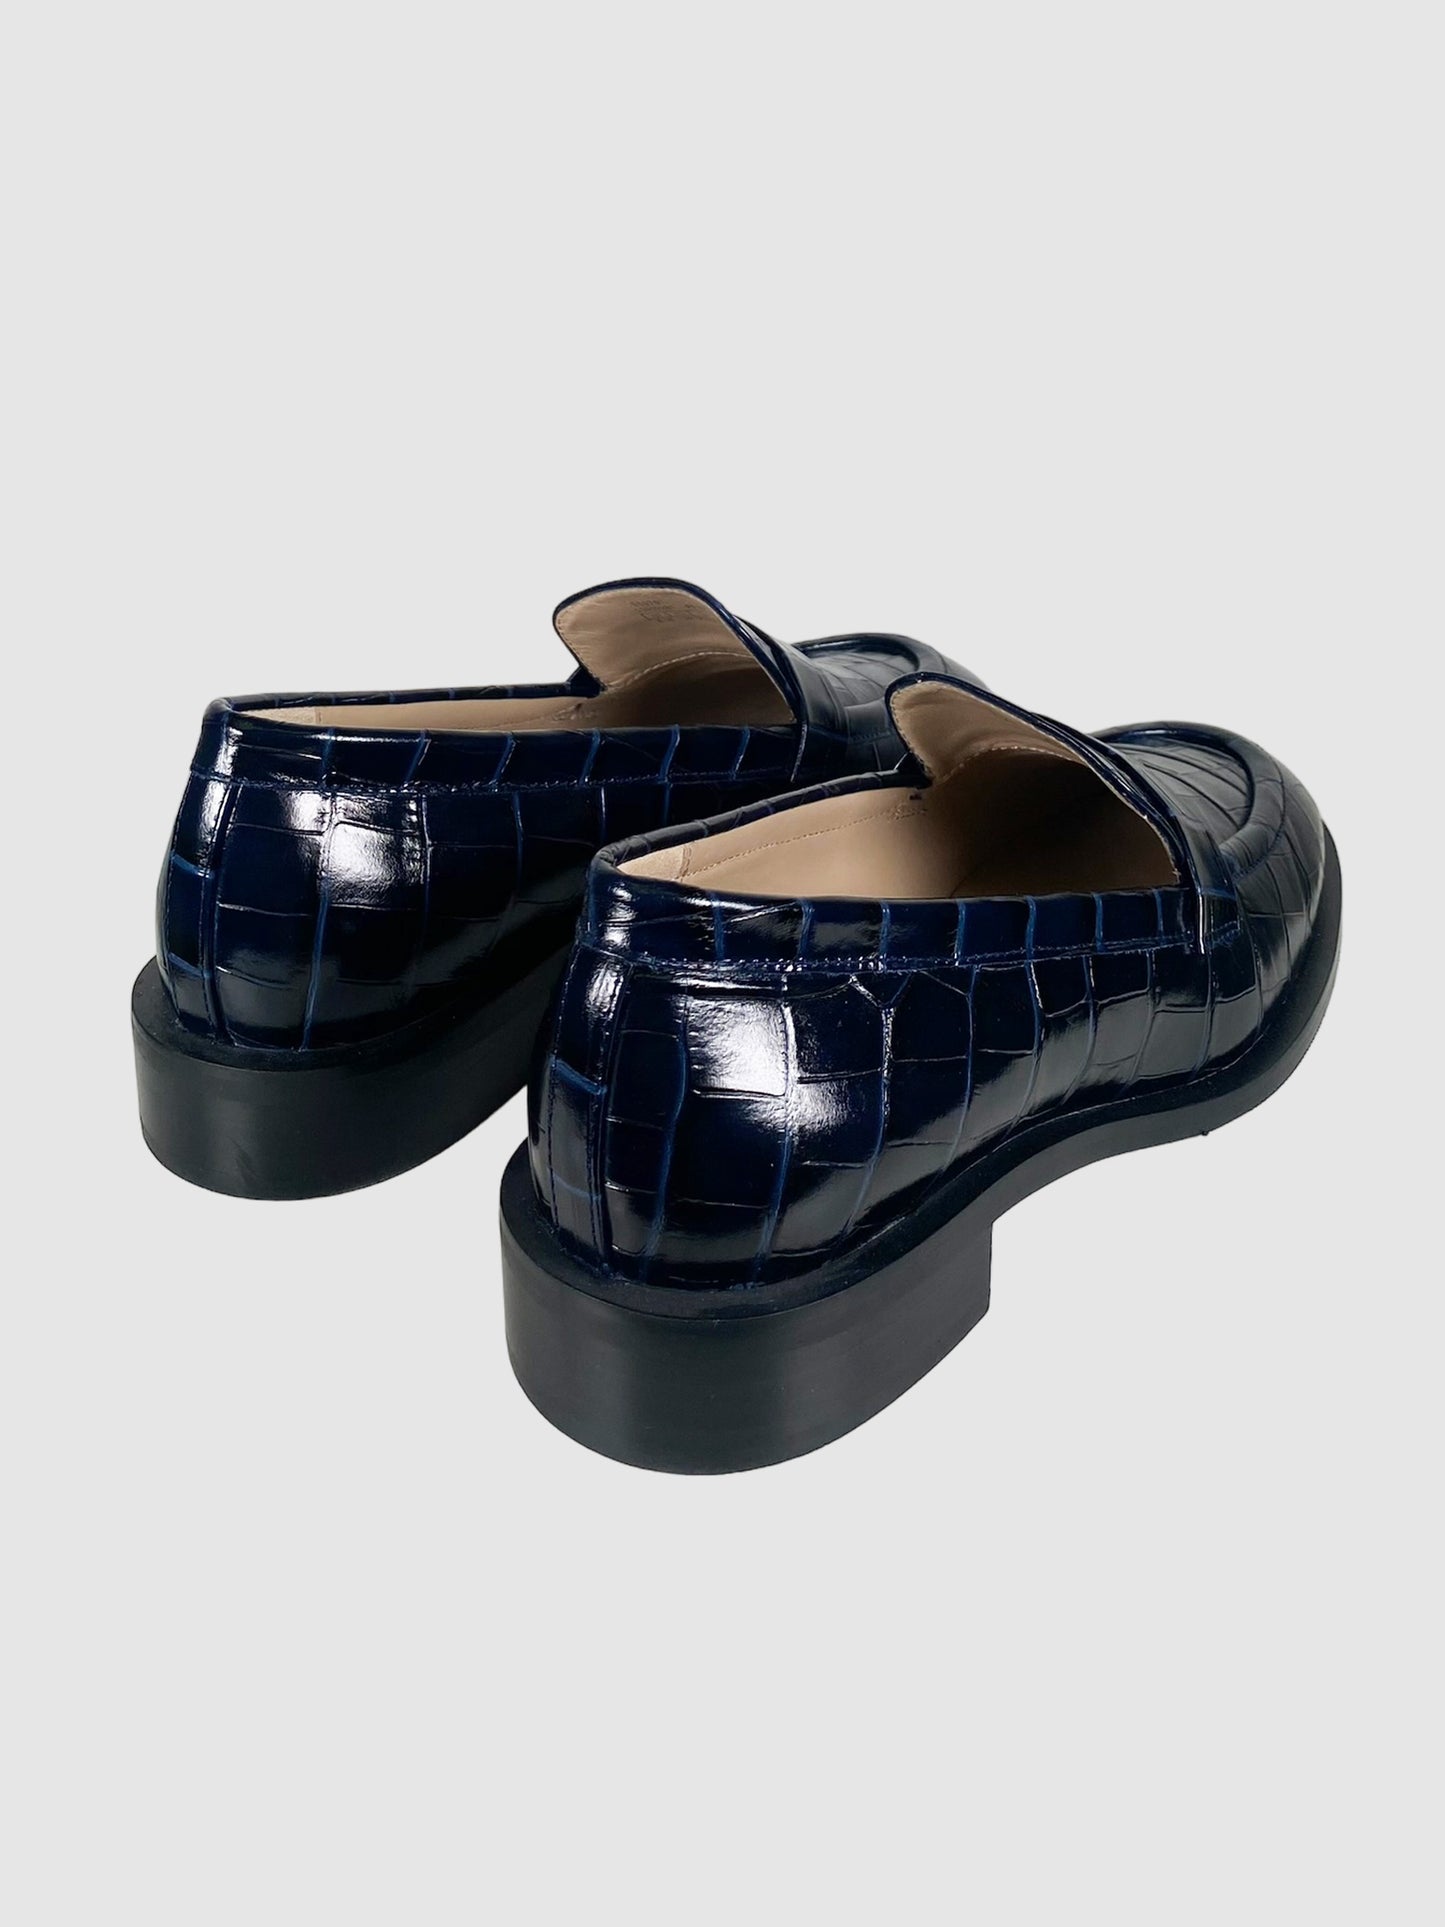 Stuart Weitzman Crocodile Print Leather Loafers - Size 8.5